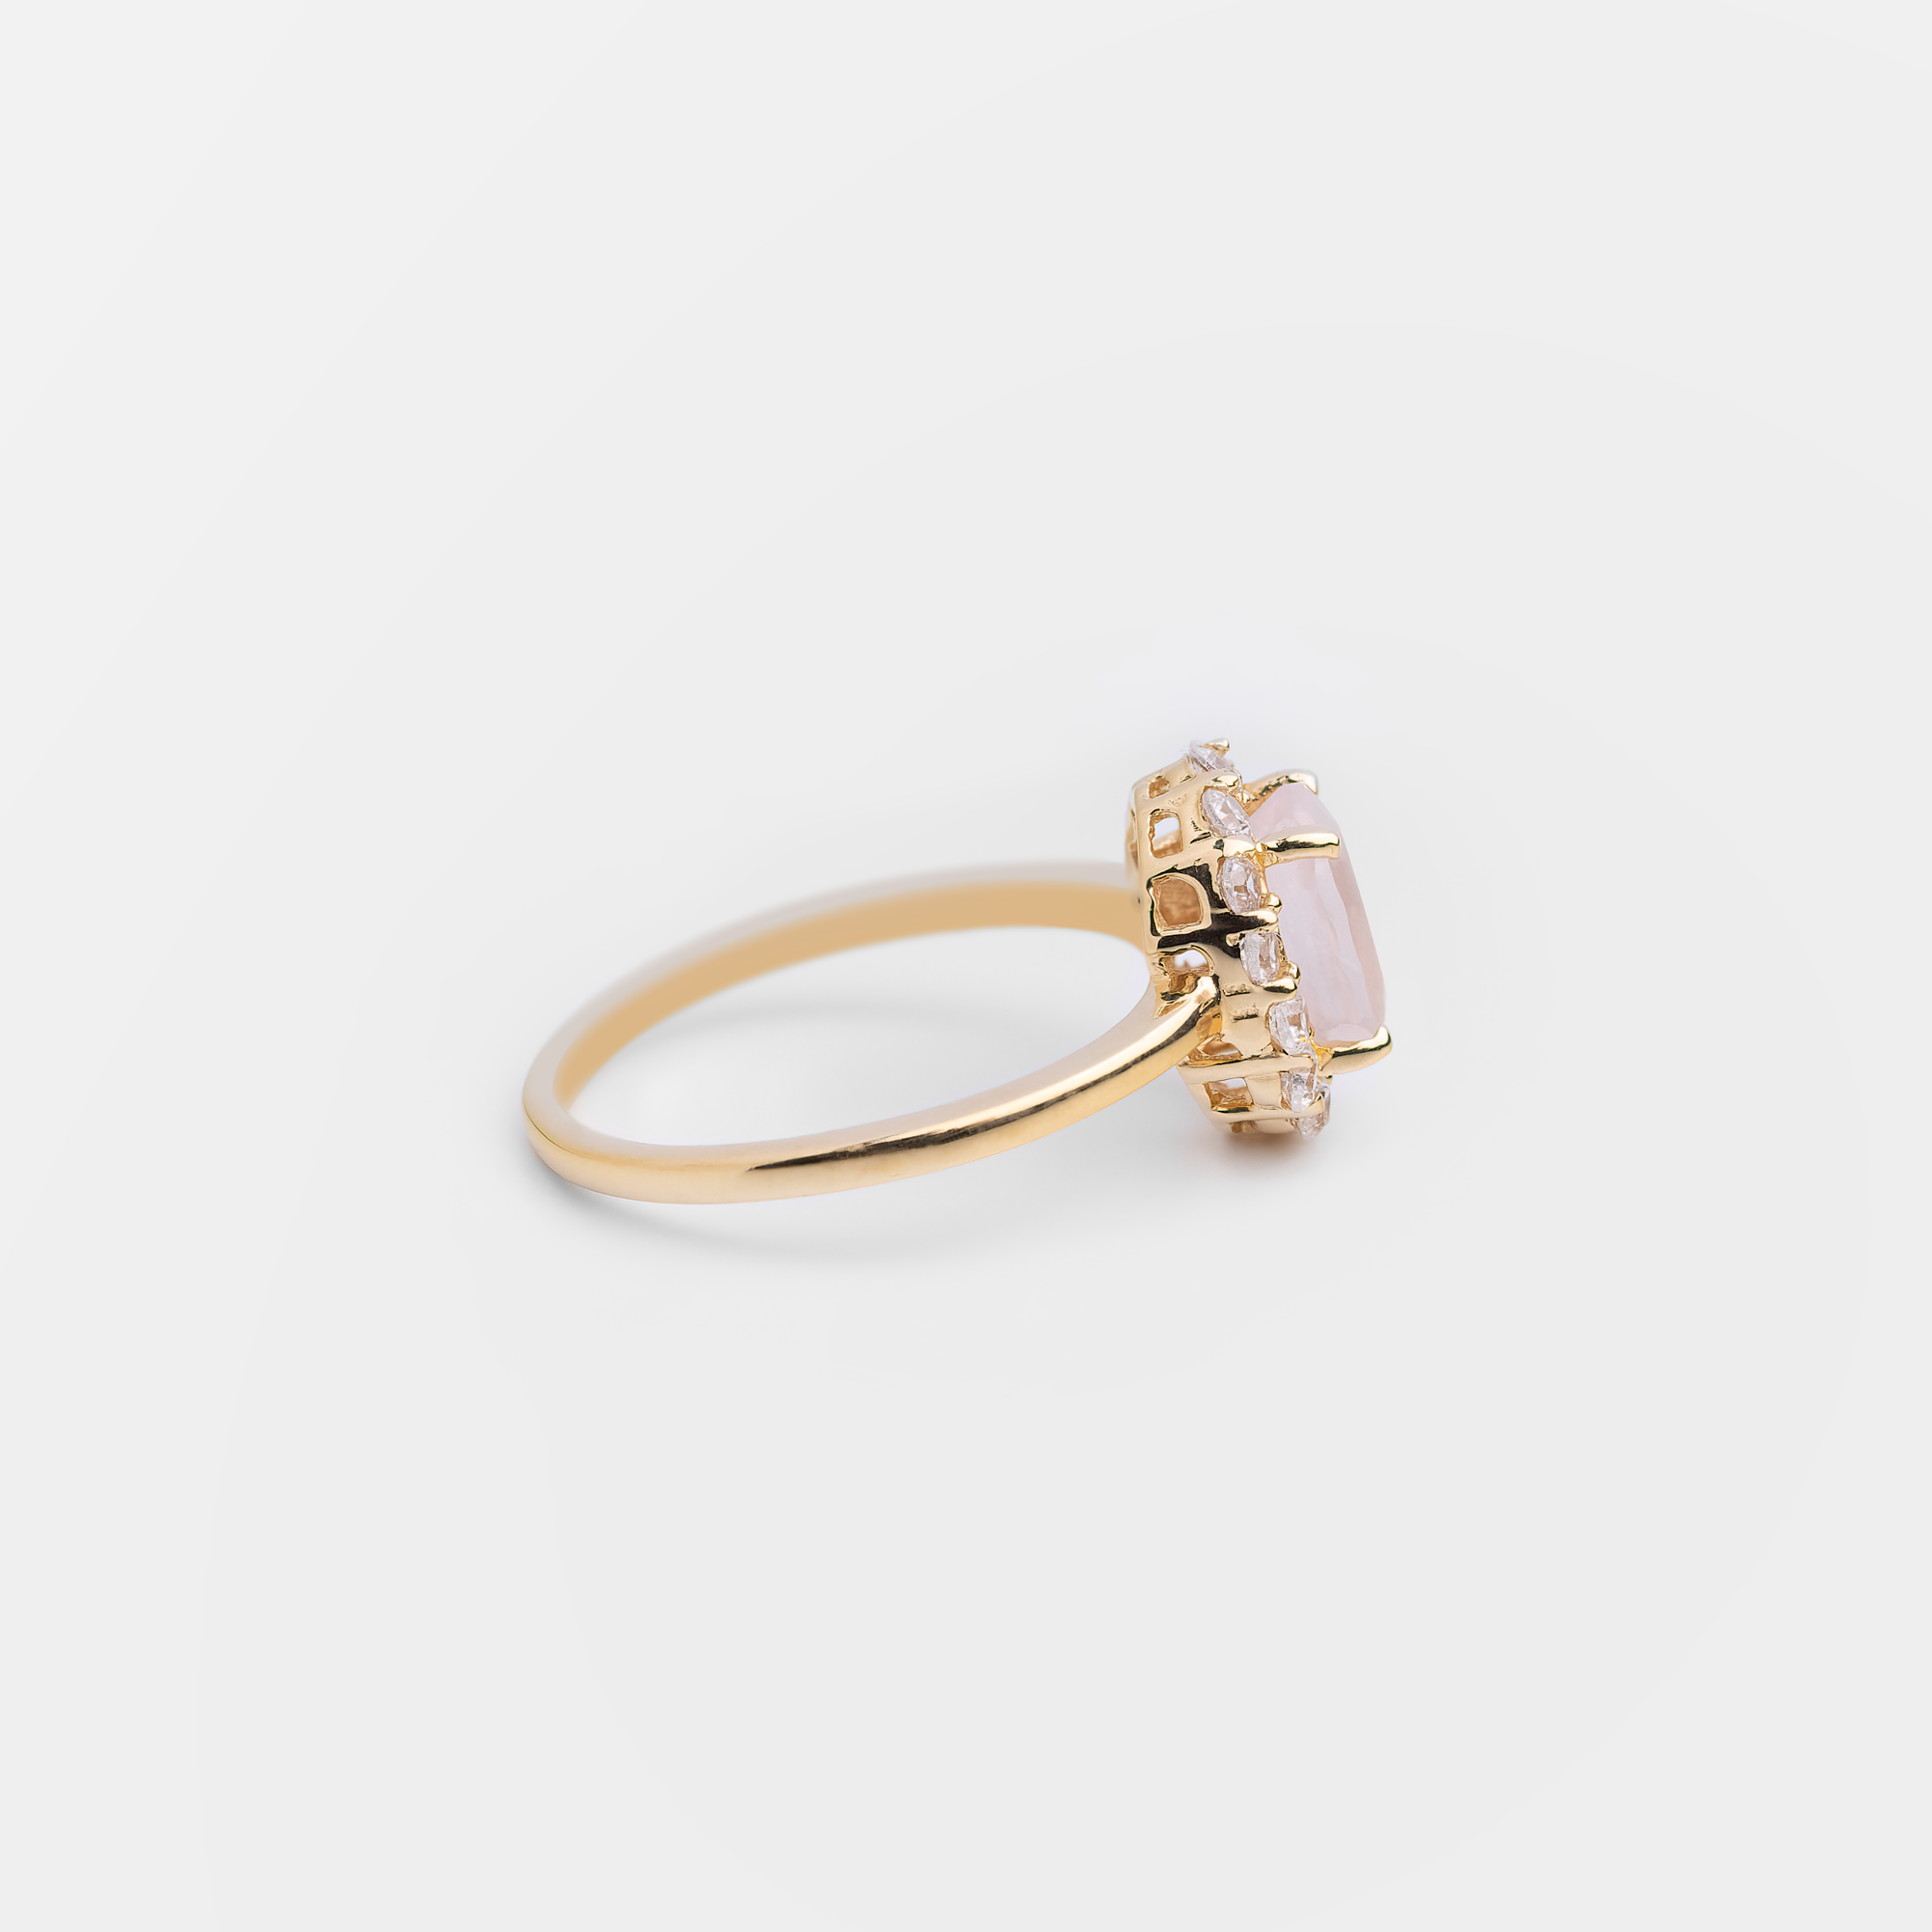 Nancy - 18K Gold Vermeil Rose Quartz Ring - Zafeer